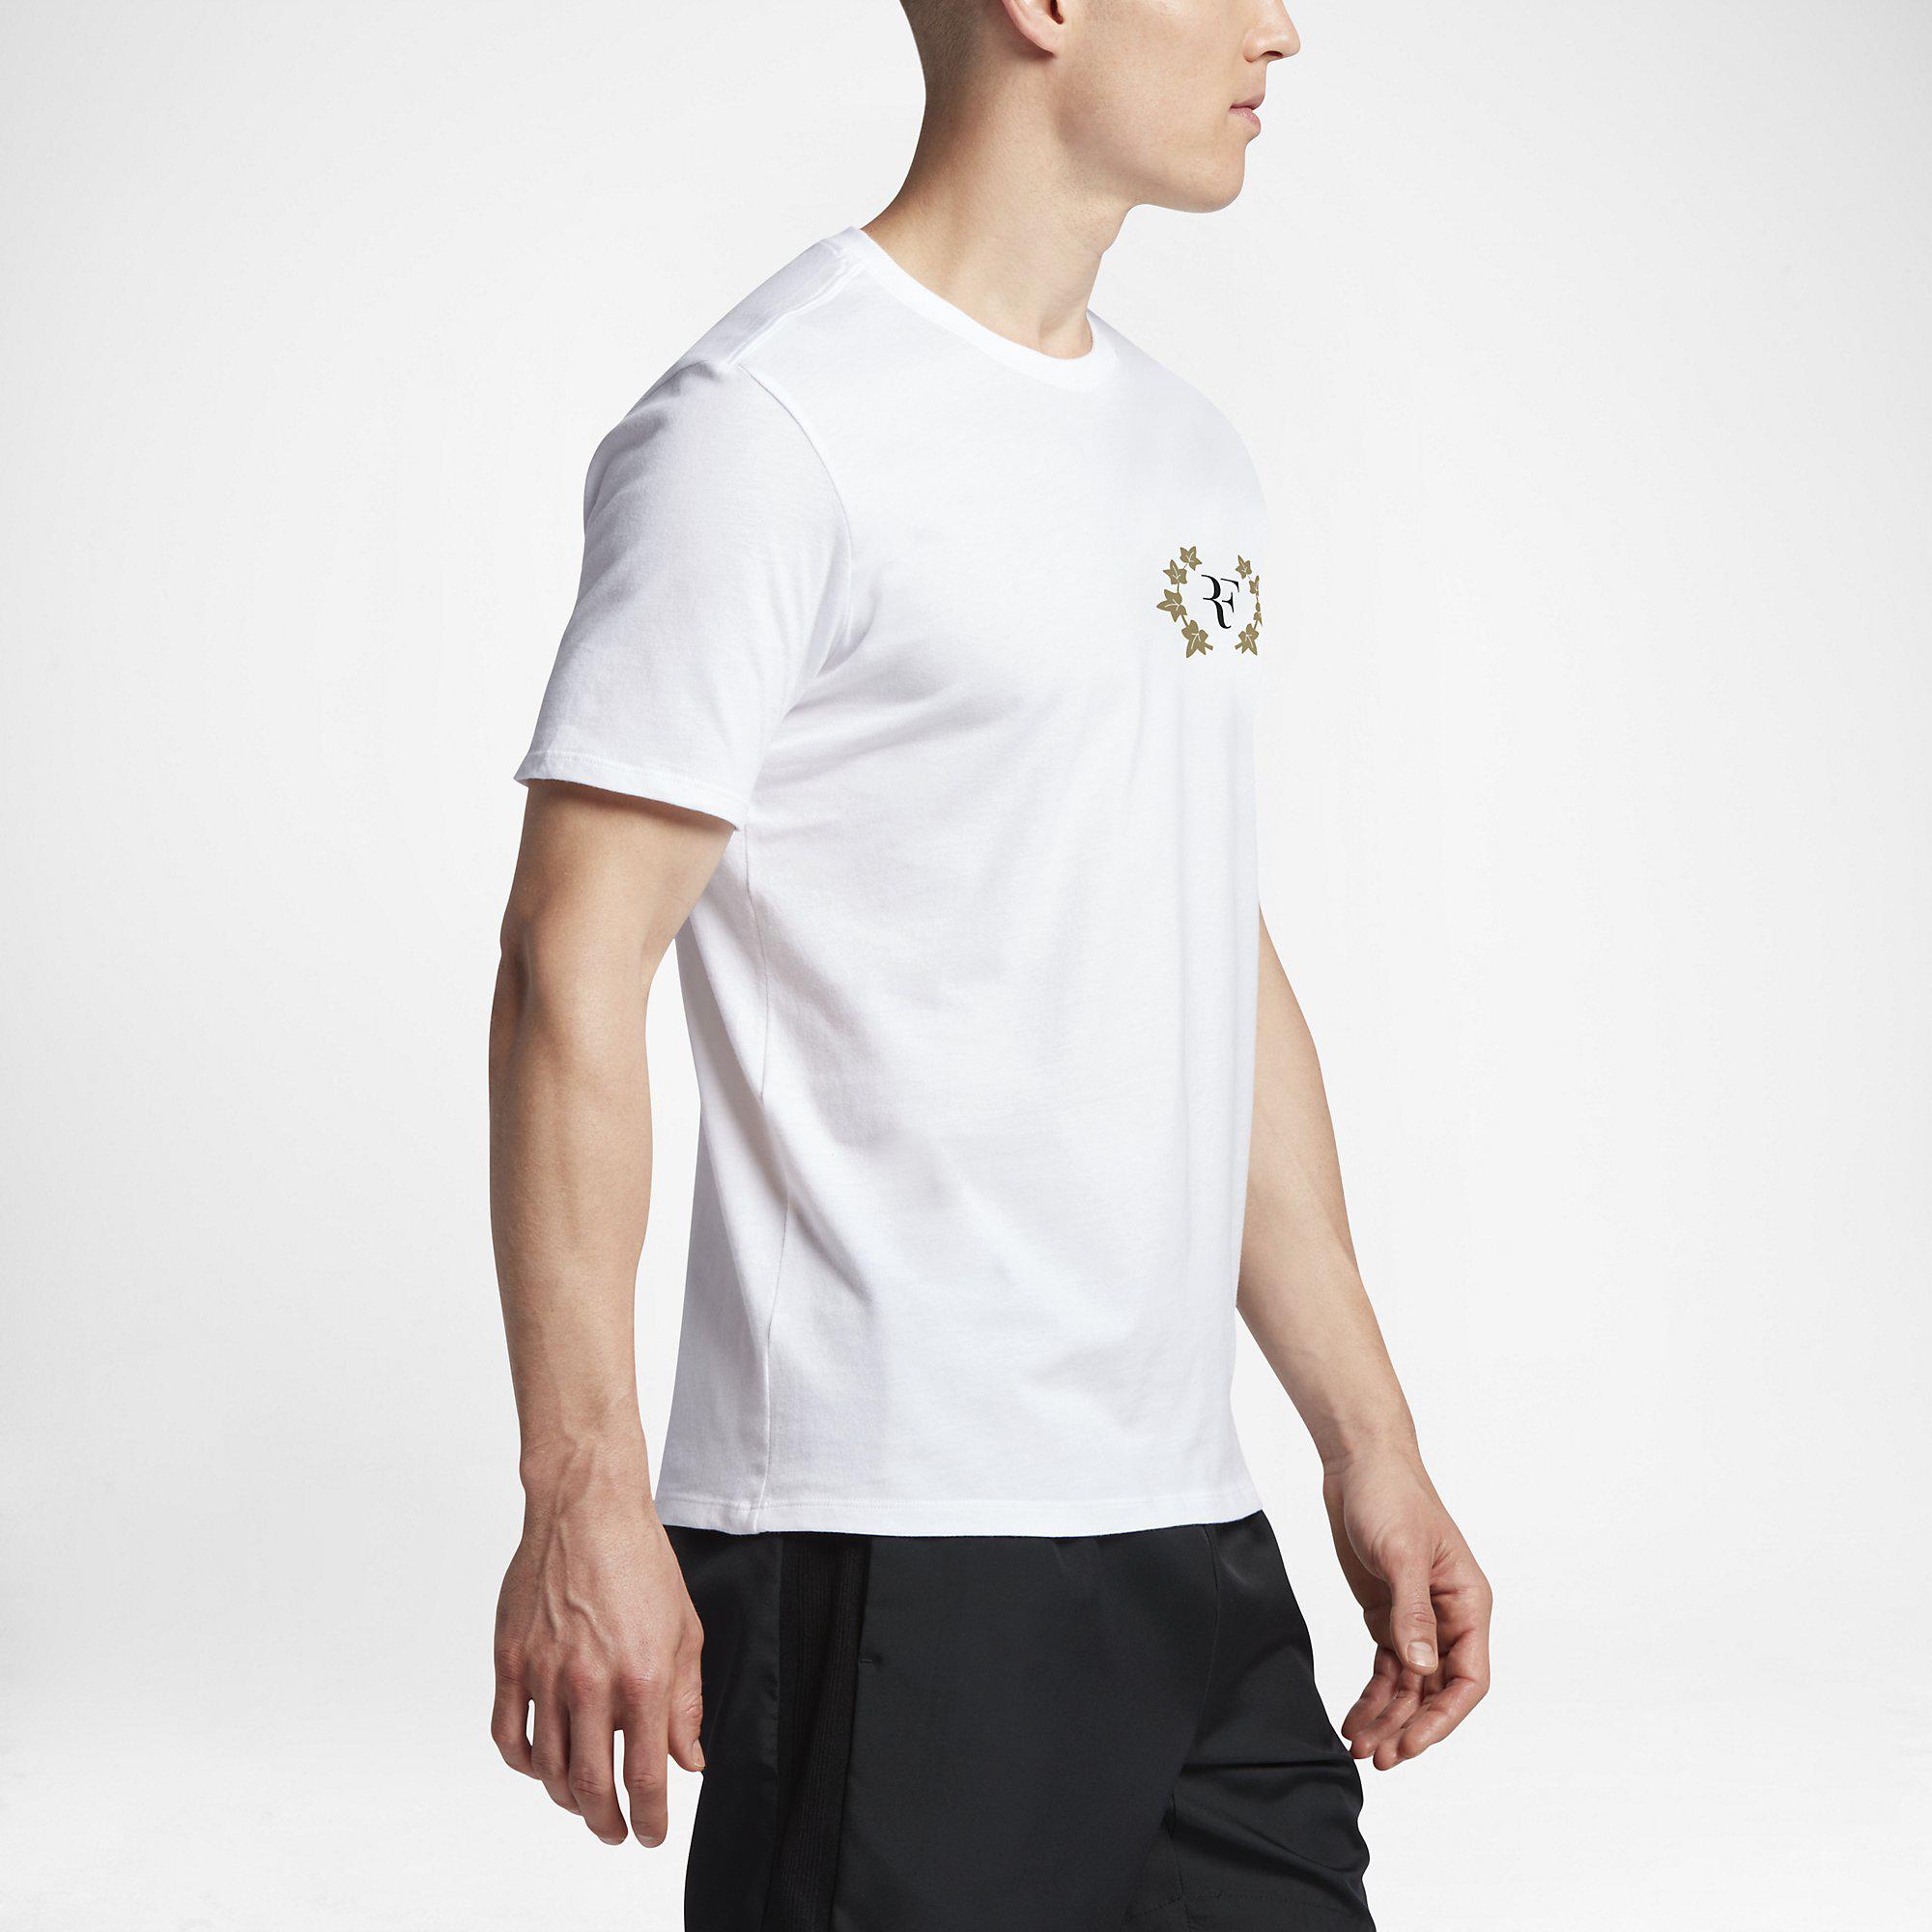 Nike Mens Federer 19 Limited Edition T-Shirt - White - Tennisnuts.com